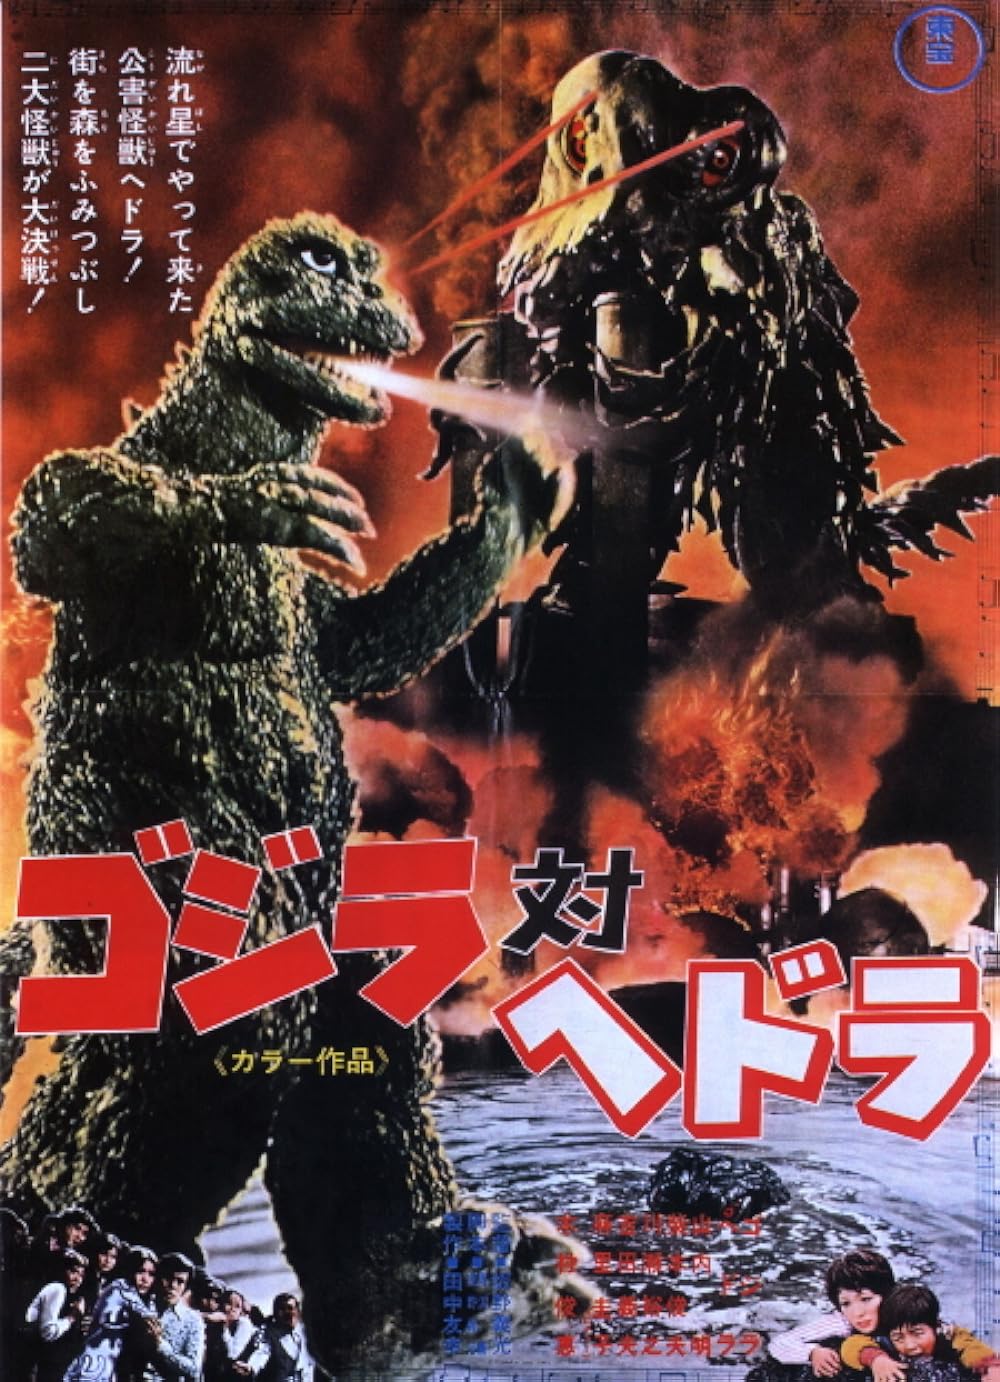 Godzilla vs. Hedorah aka Godzilla vs. the Smog Monster ( Gojira tai Hedorâ )